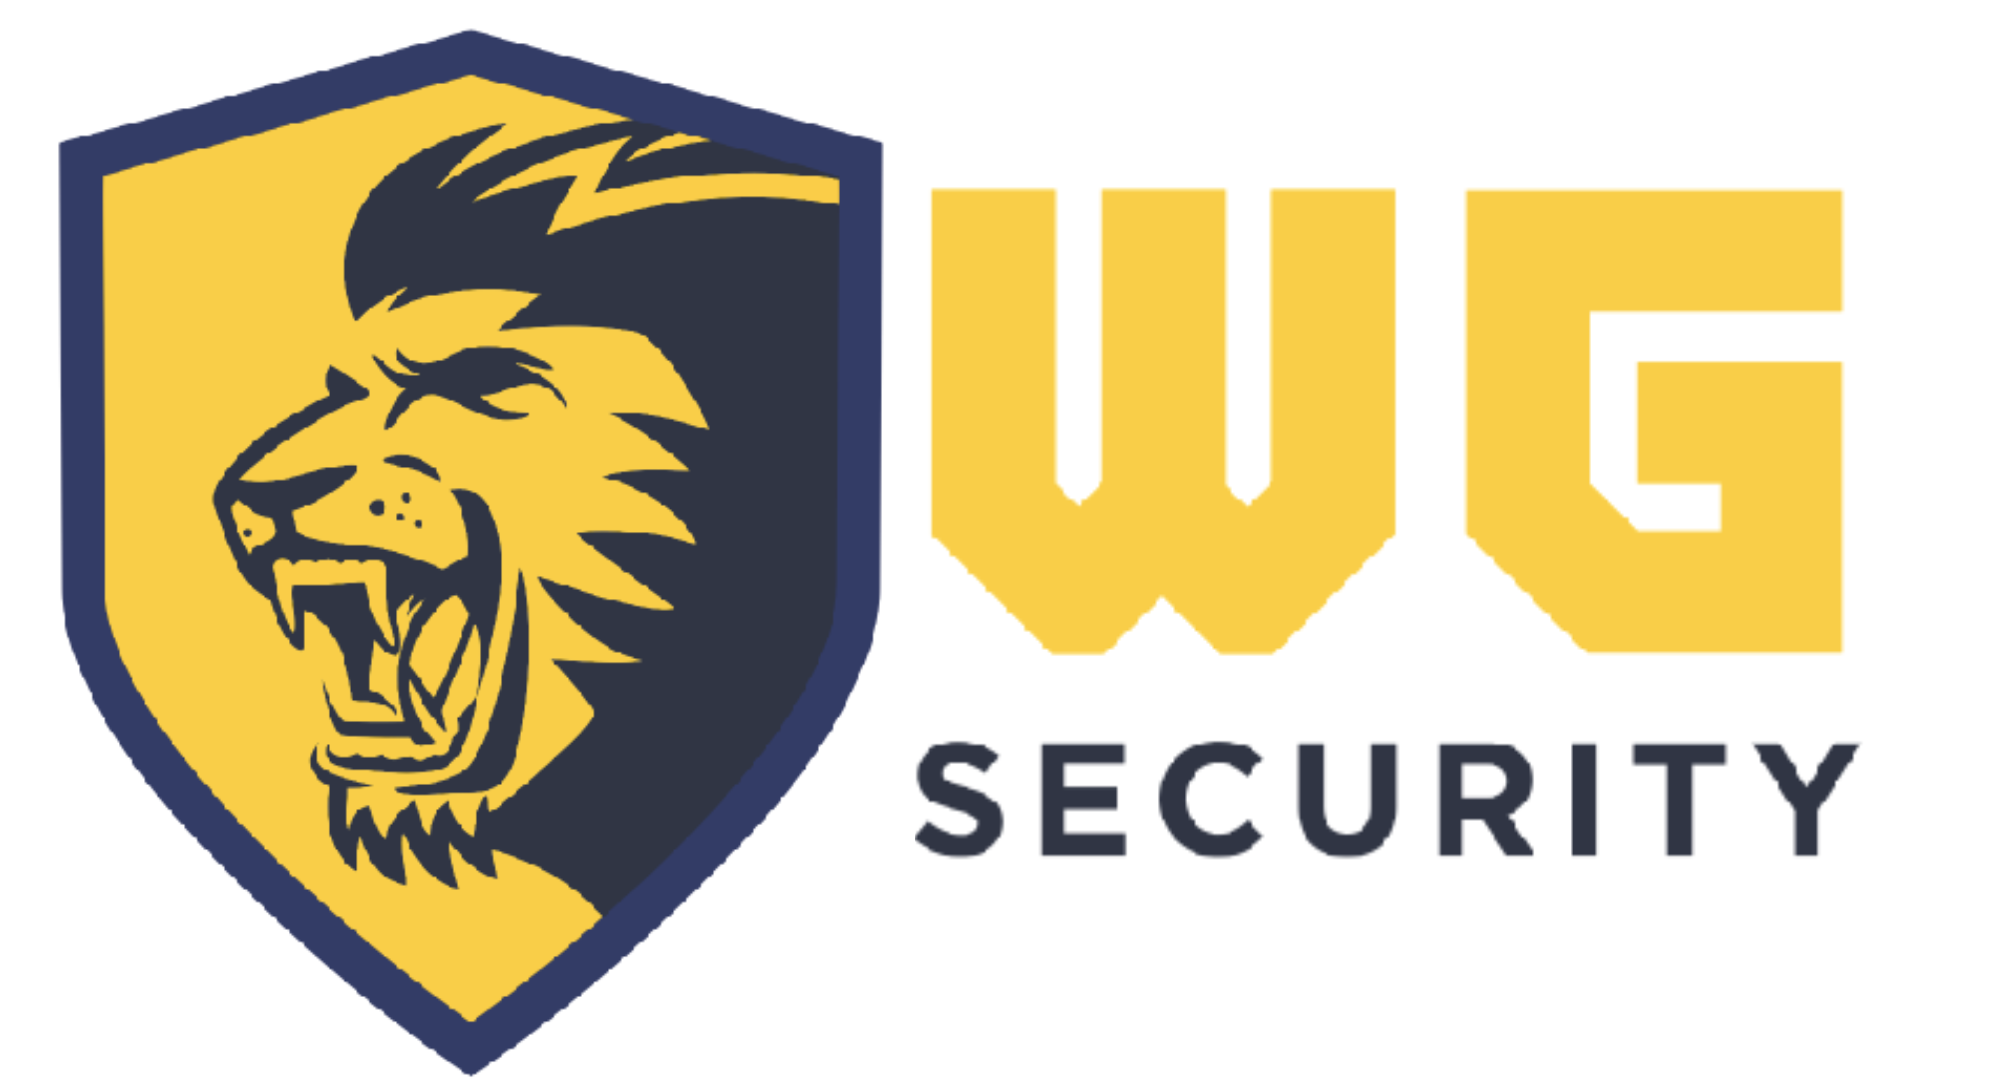 WG Security